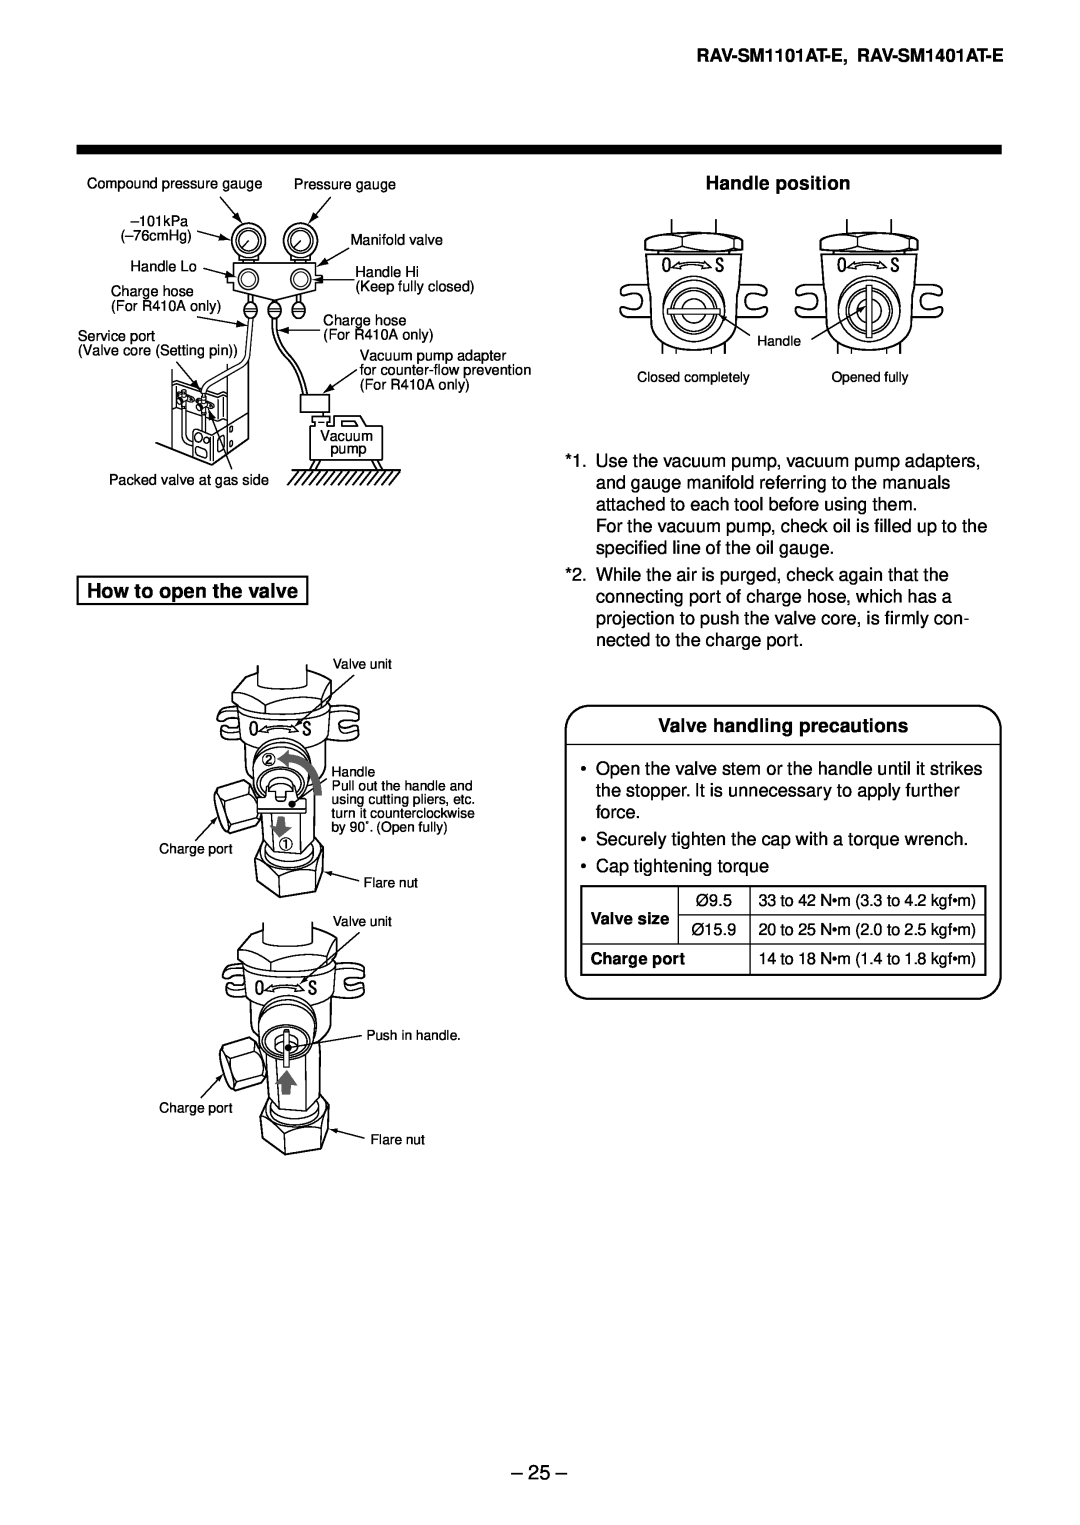 Toshiba How to open the valve, Handle position, Valve handling precautions, RAV-SM1101AT-E, RAV-SM1401AT-E, Vacuum pump 